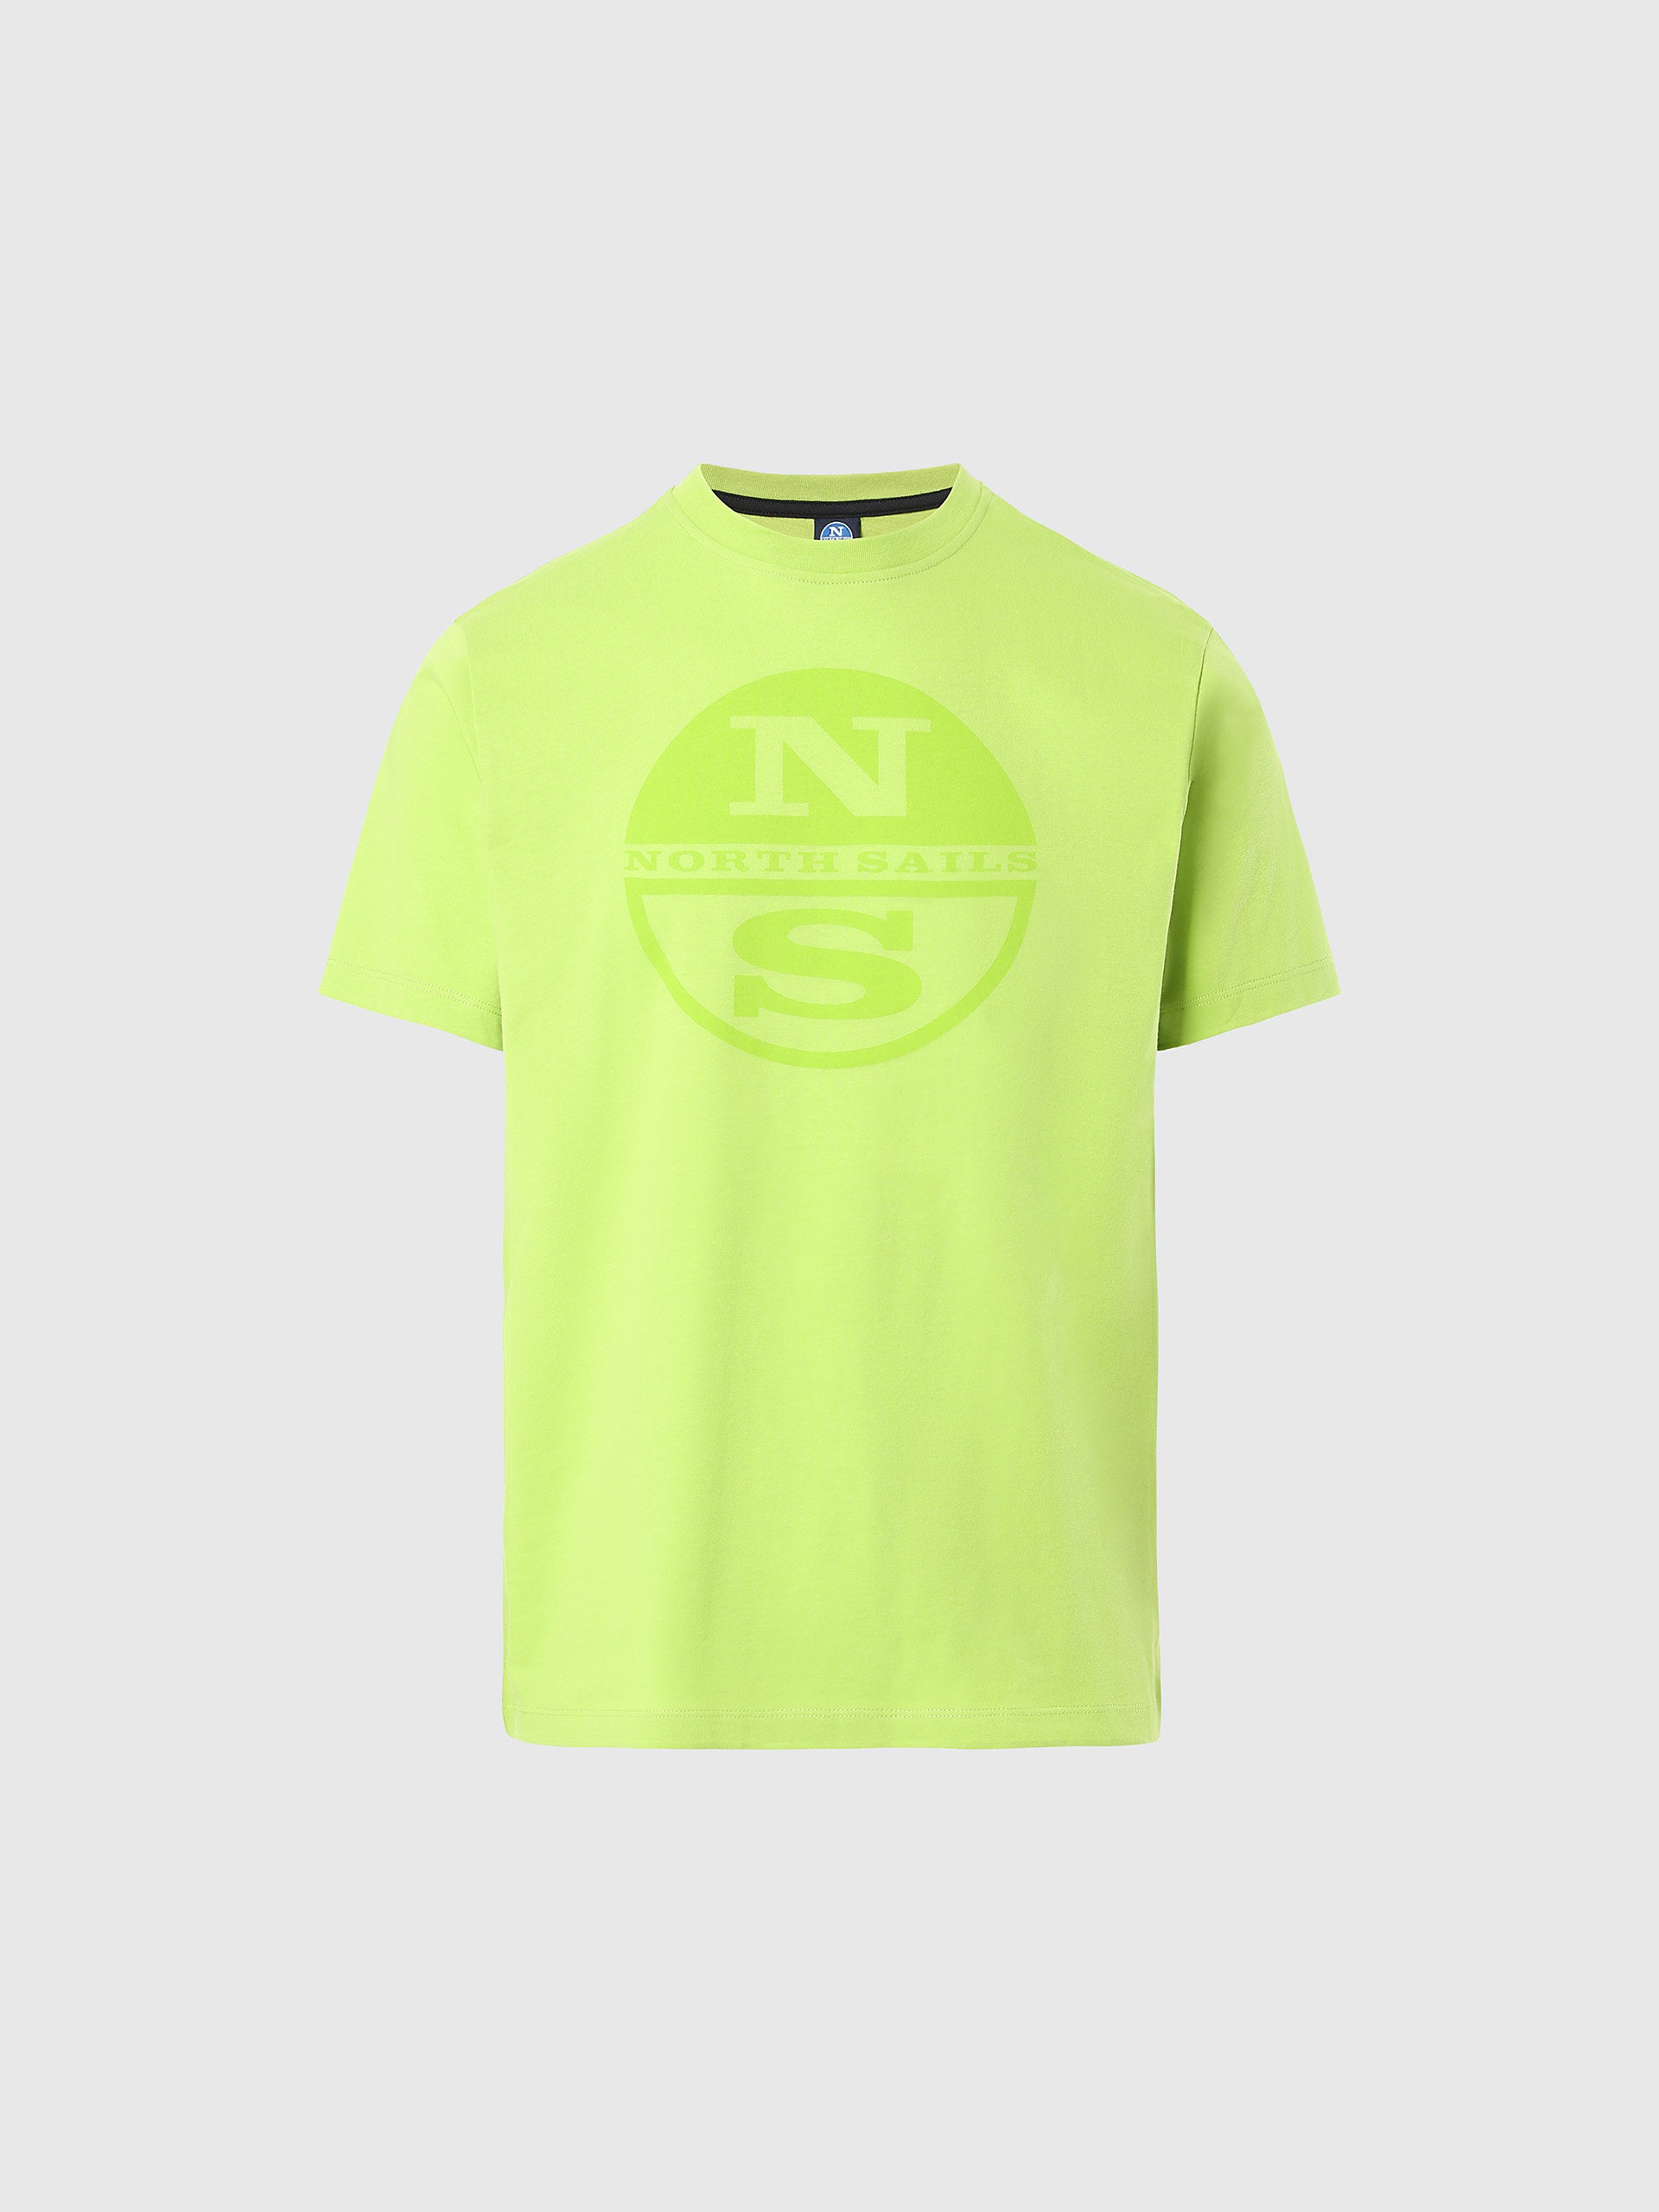 North Sails - T-shirt con stampa maxi logoNorth SailsLimeM